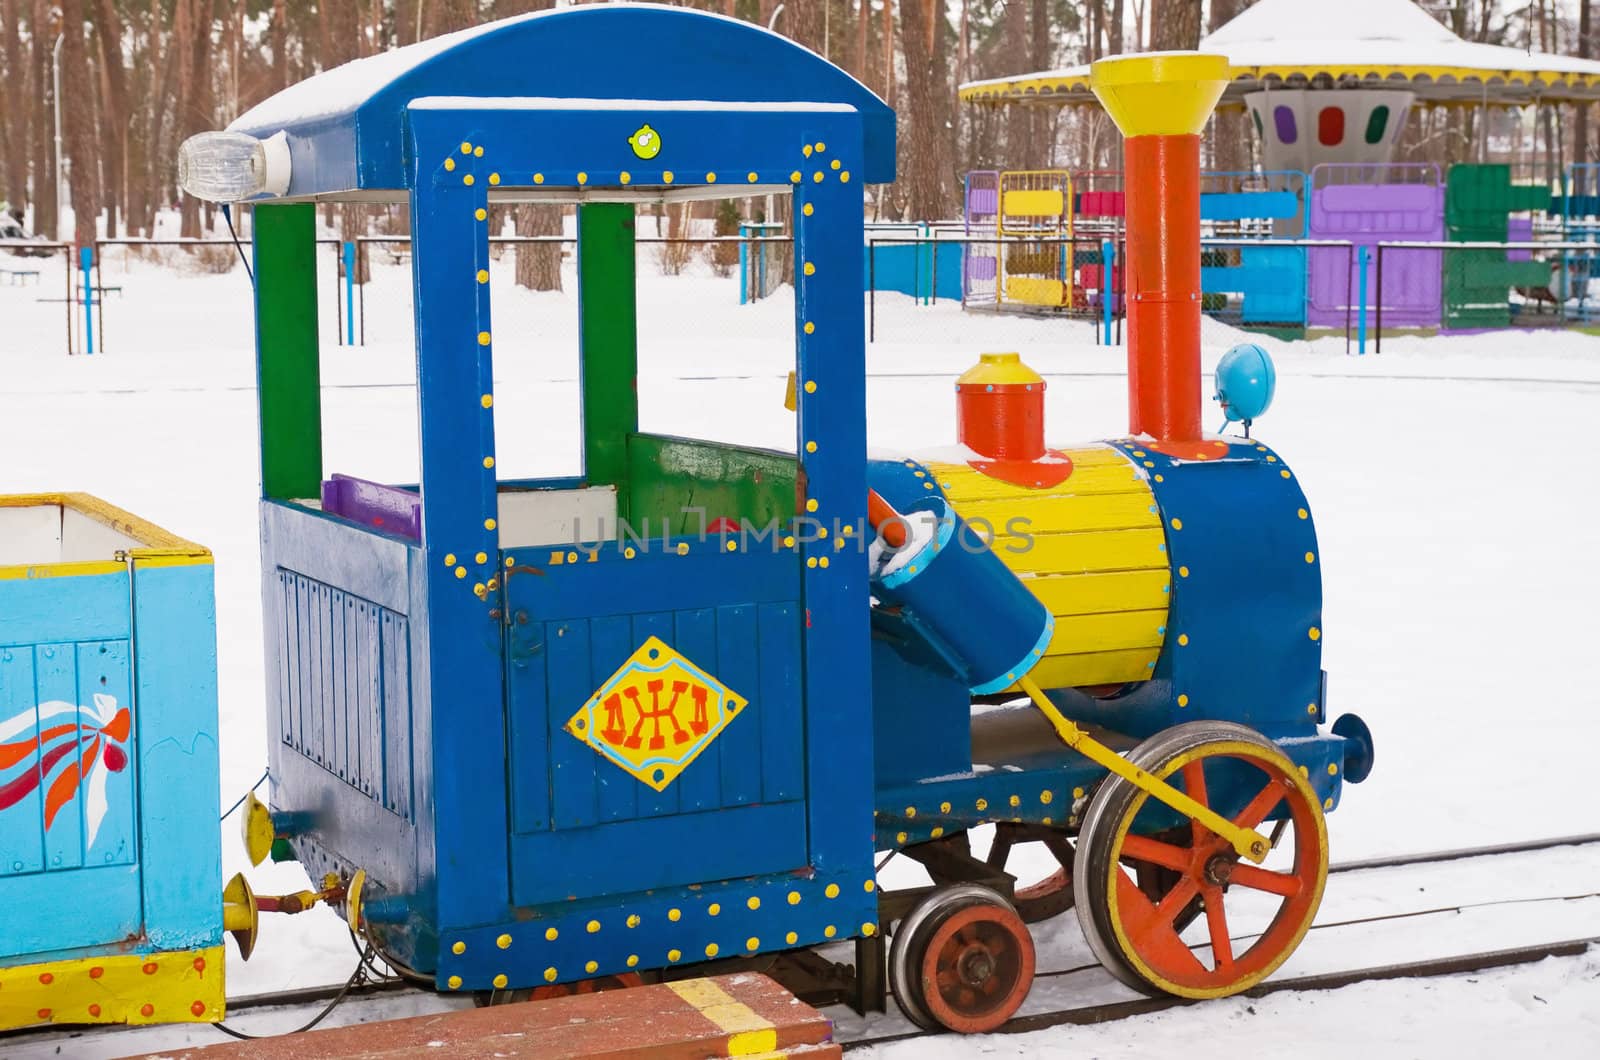 Children's Railway. Attraction in Winter Park